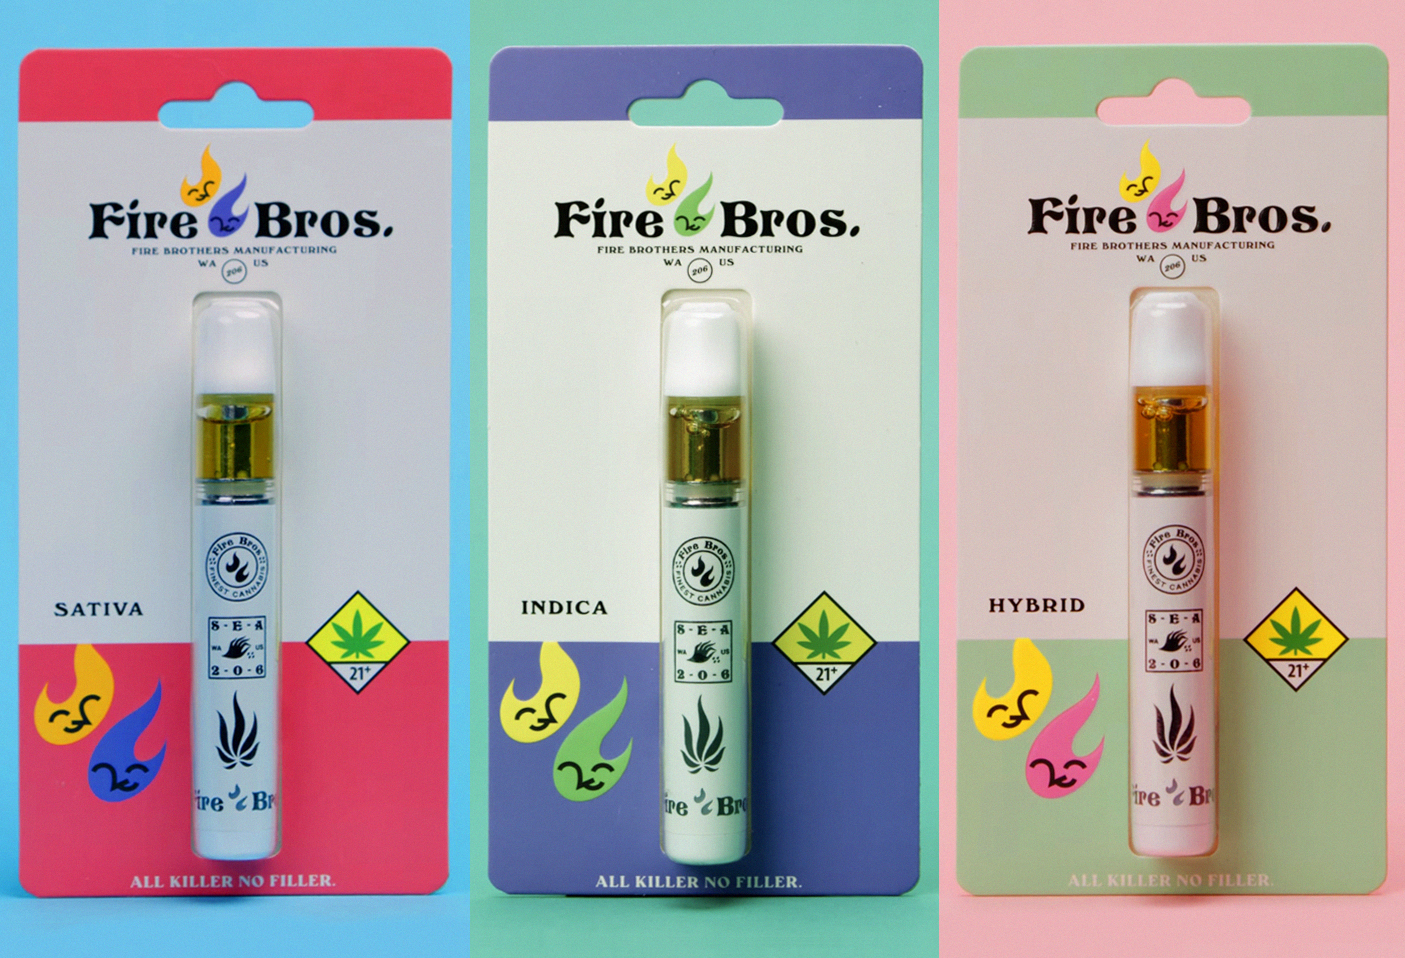 firebros-bros-fire-seattle-weed-balze-herb-206-branding-logo-vacaliebres-maekshiftstudio-glyphs-smoke-symbols